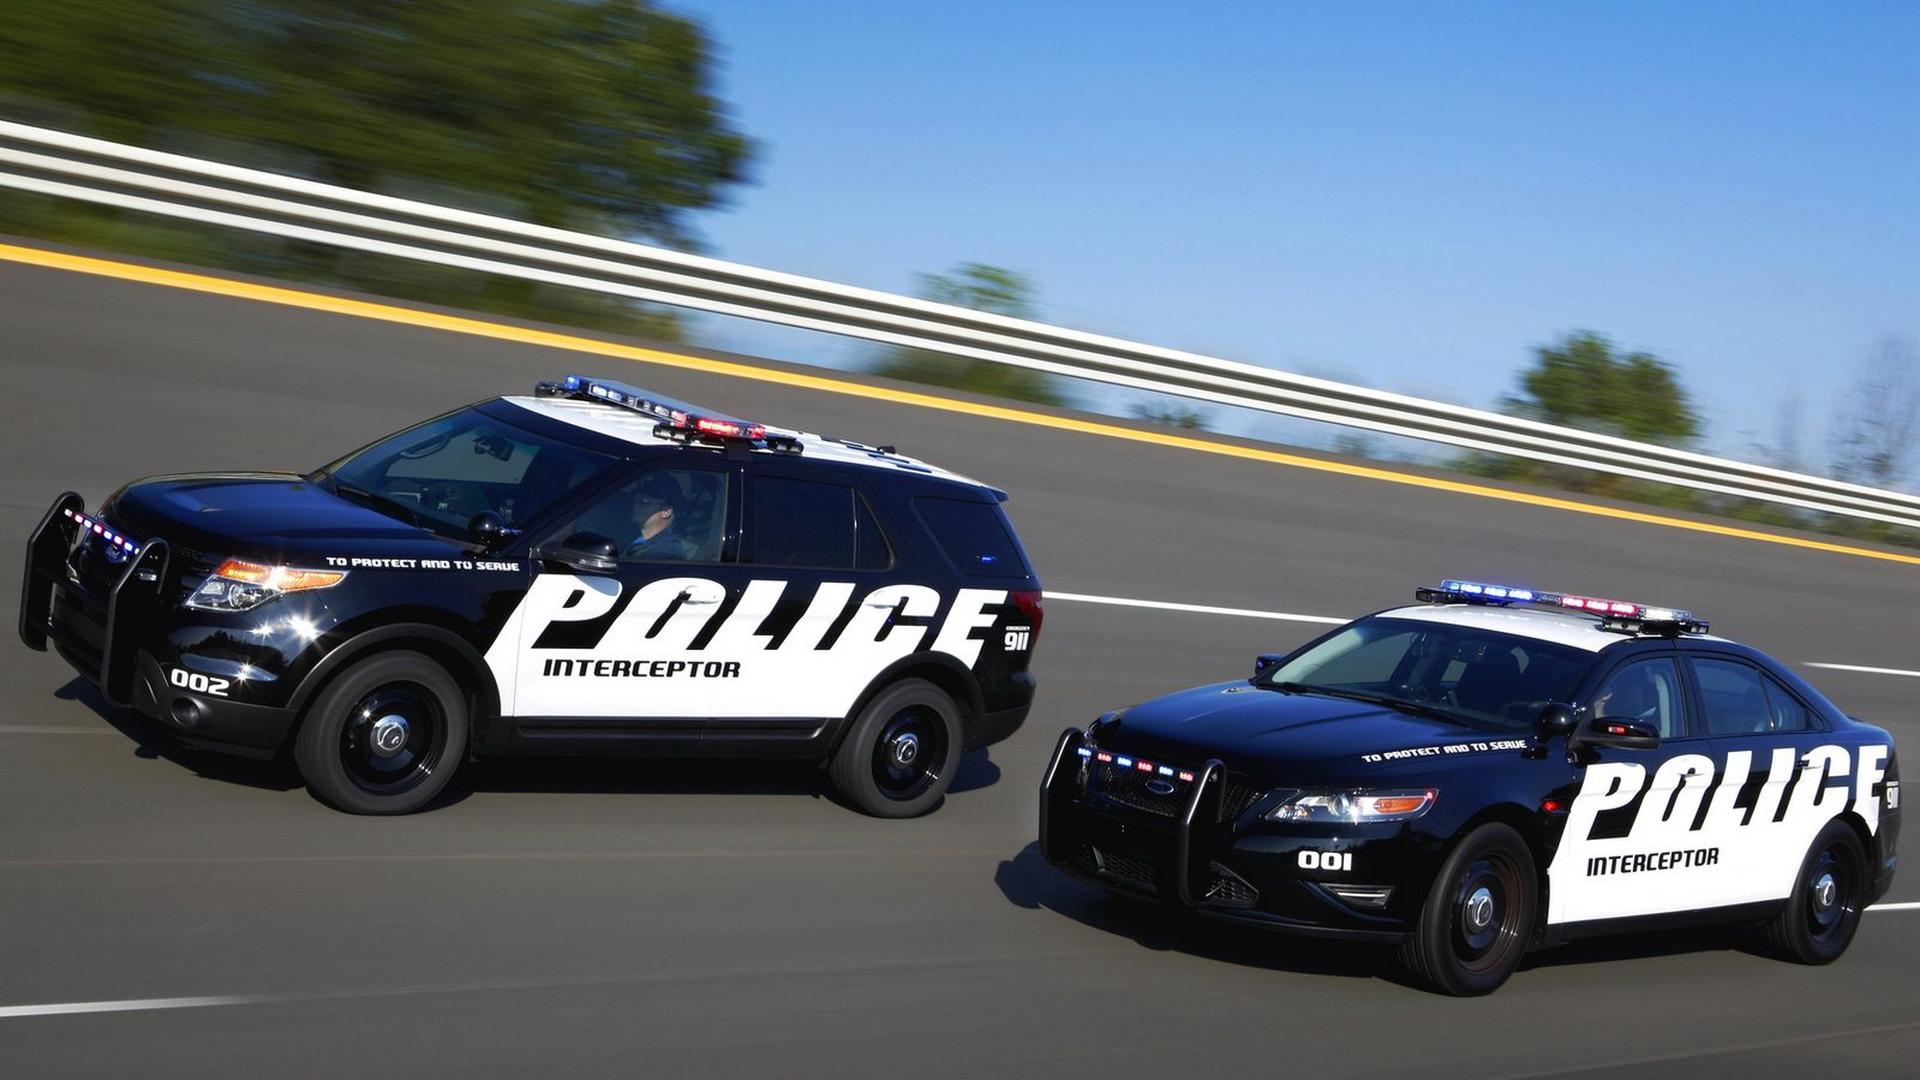 2011 Форд-Полицейский перехватчик 1920x1080